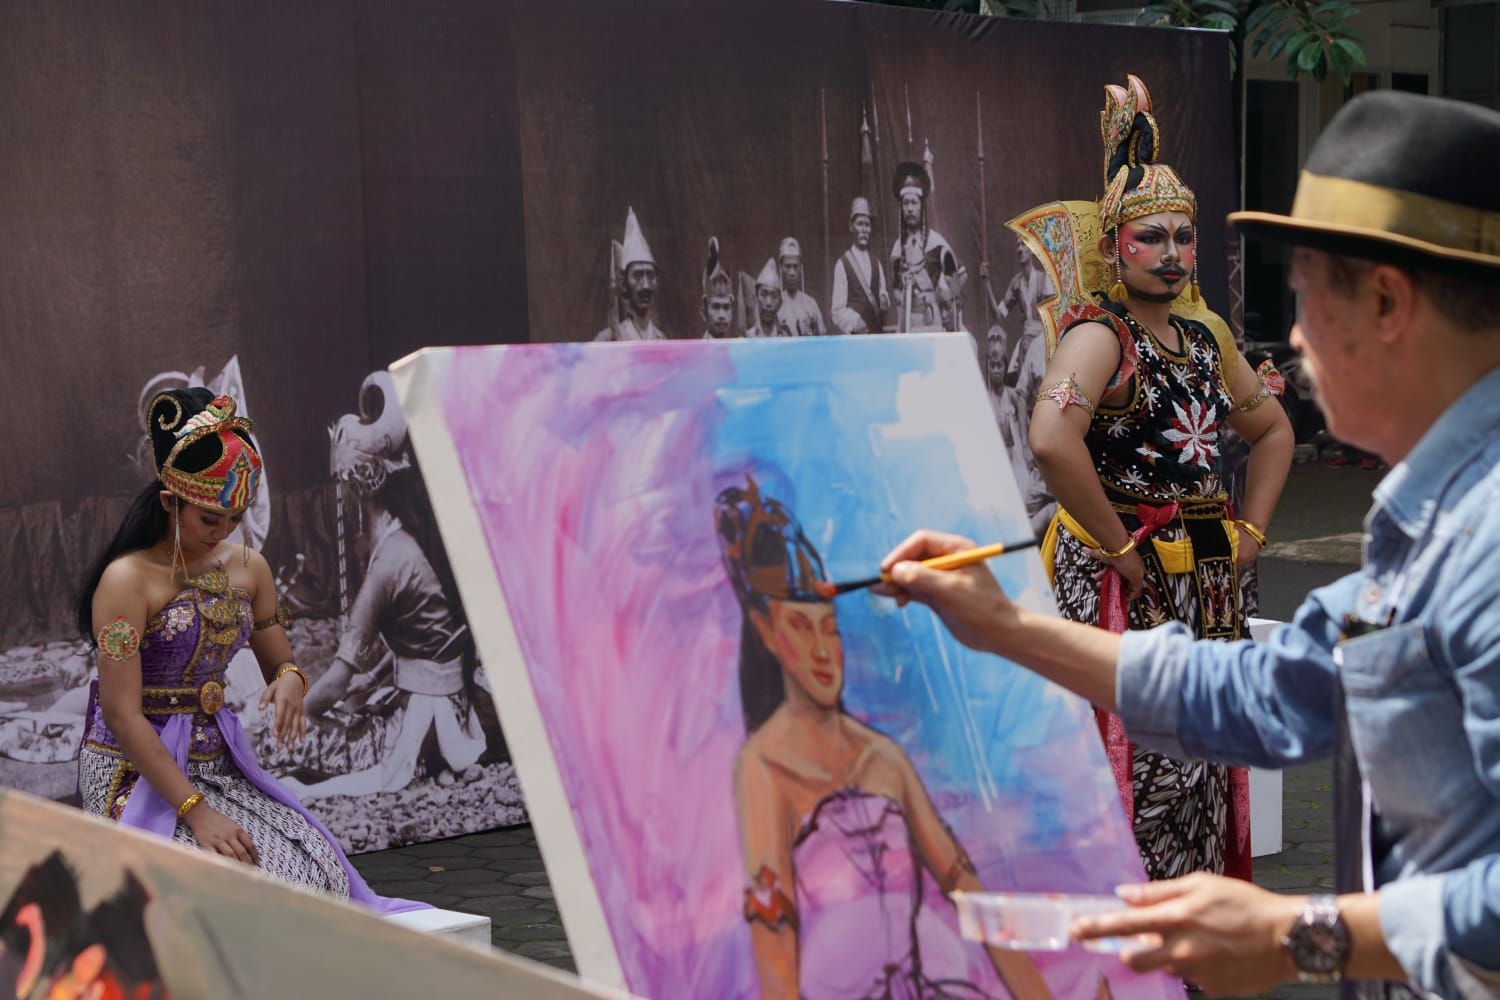 Lomba Cosplay Wayang tingkat SMA Sederajat Se Bandung Raya, Live Painting, dan Pertunjukkan Wayang Orang Meriahkan Lanjutan ISBI Bandung Arts Festival 2022